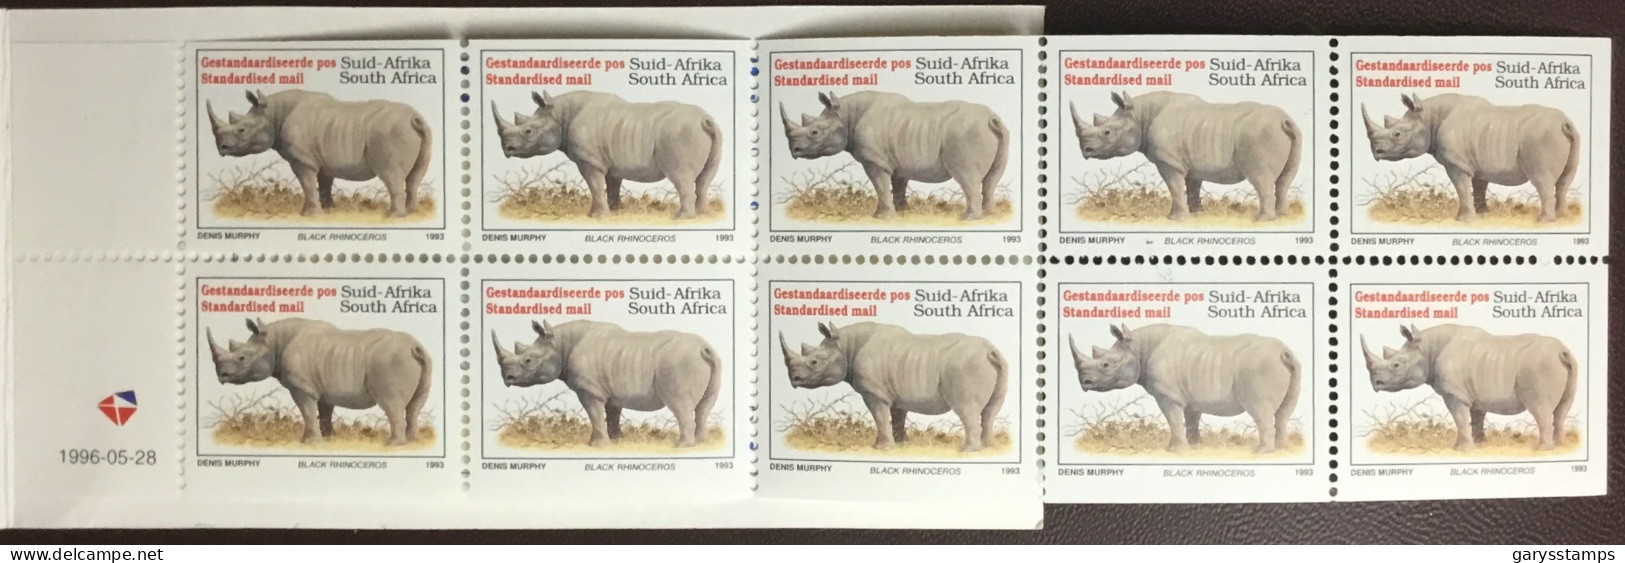 South Africa 1995 Standardised Mail Rhino Animals Booklet Unused - Neushoorn